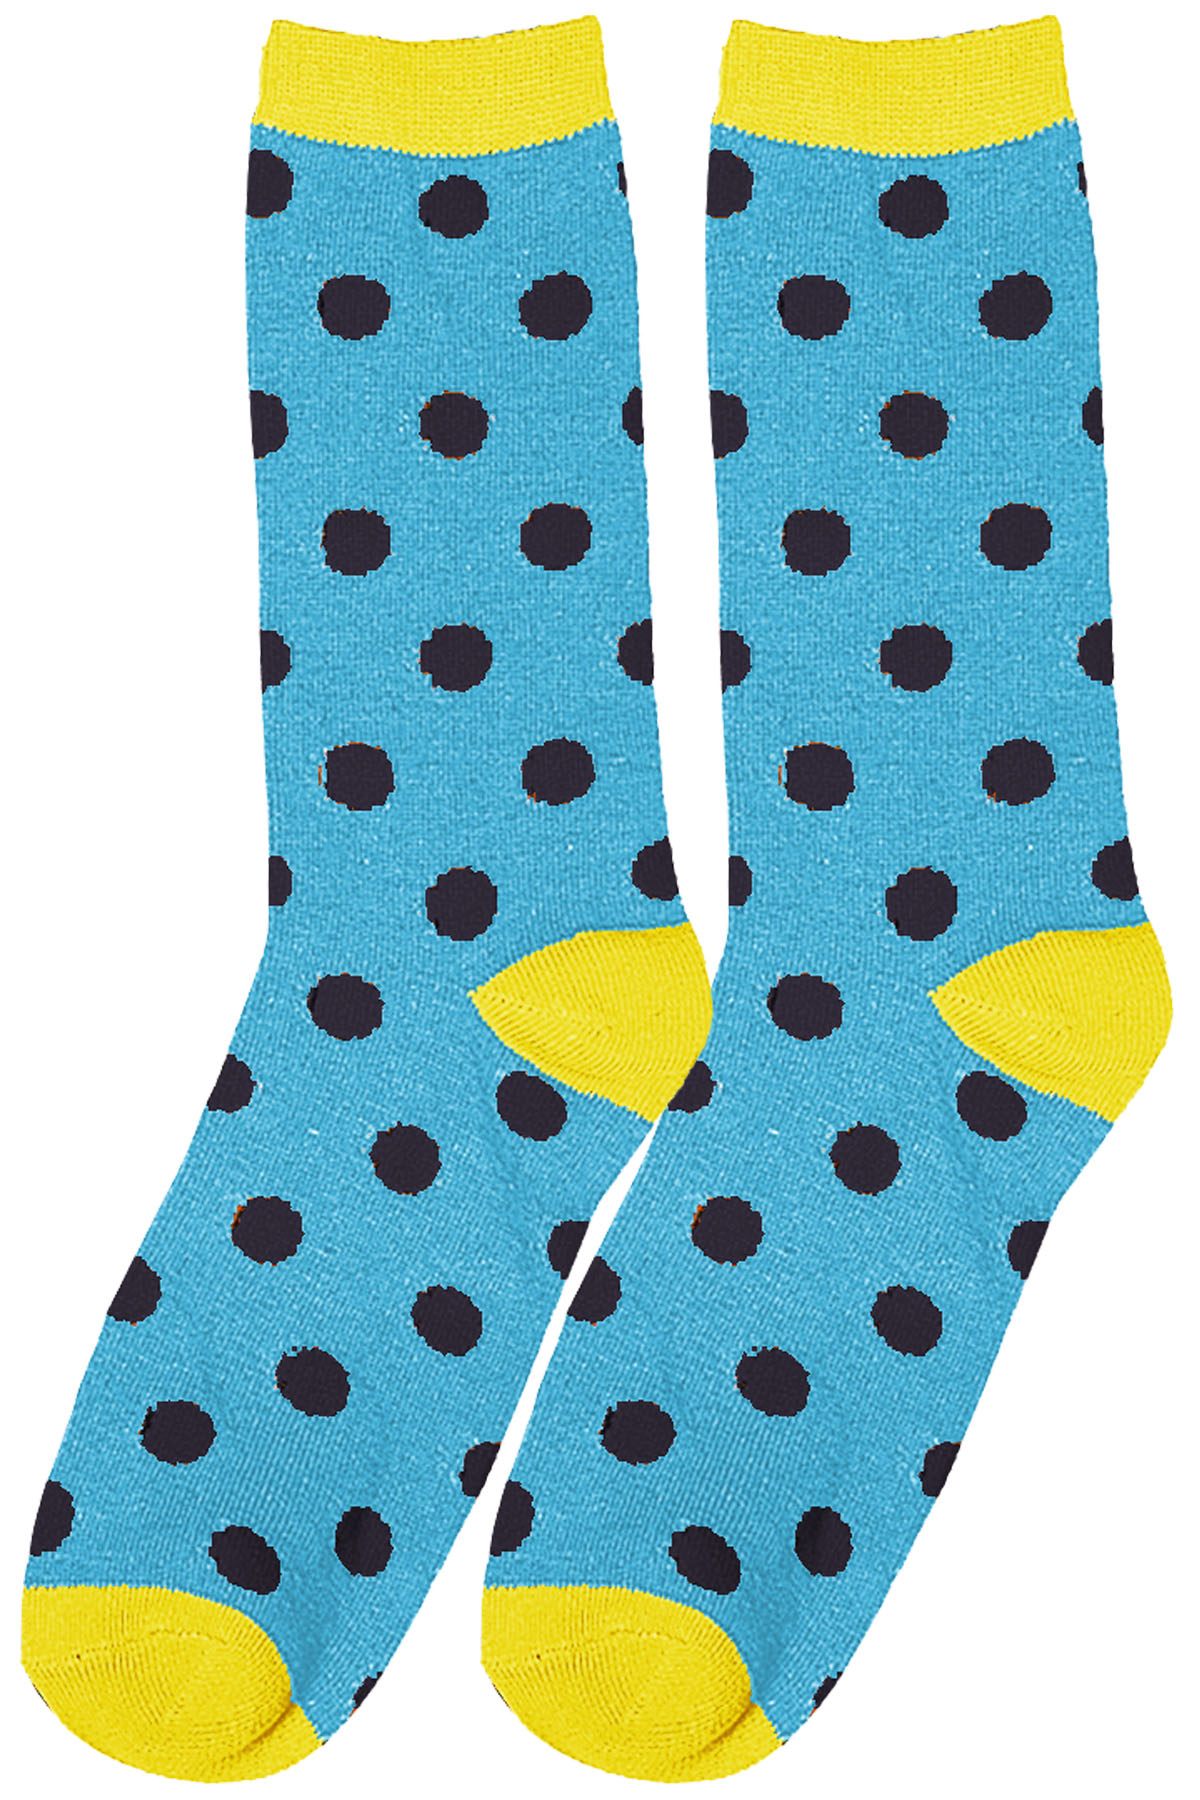 Mamia Turquoise/Yellow/Black Polka Dot Crew Socks